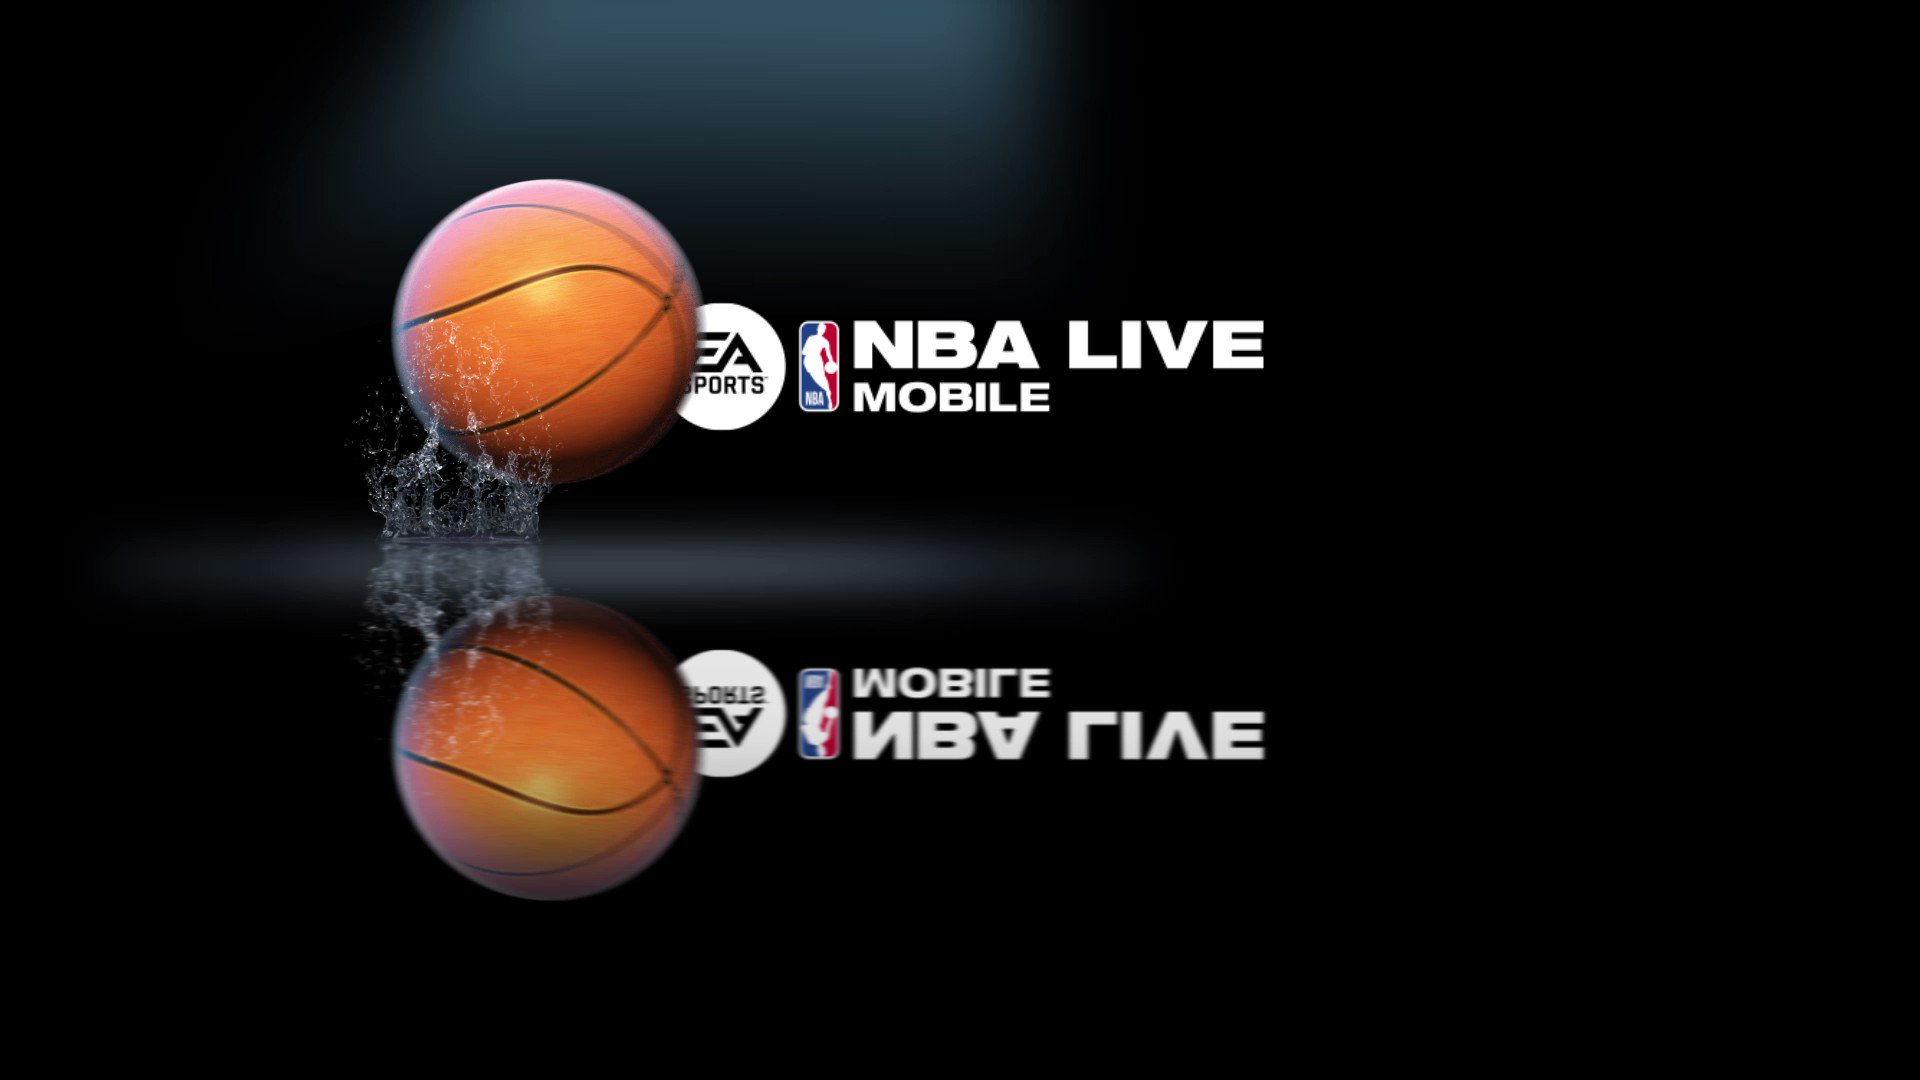 EA SPORTS NBA LIVE MOBILE on X